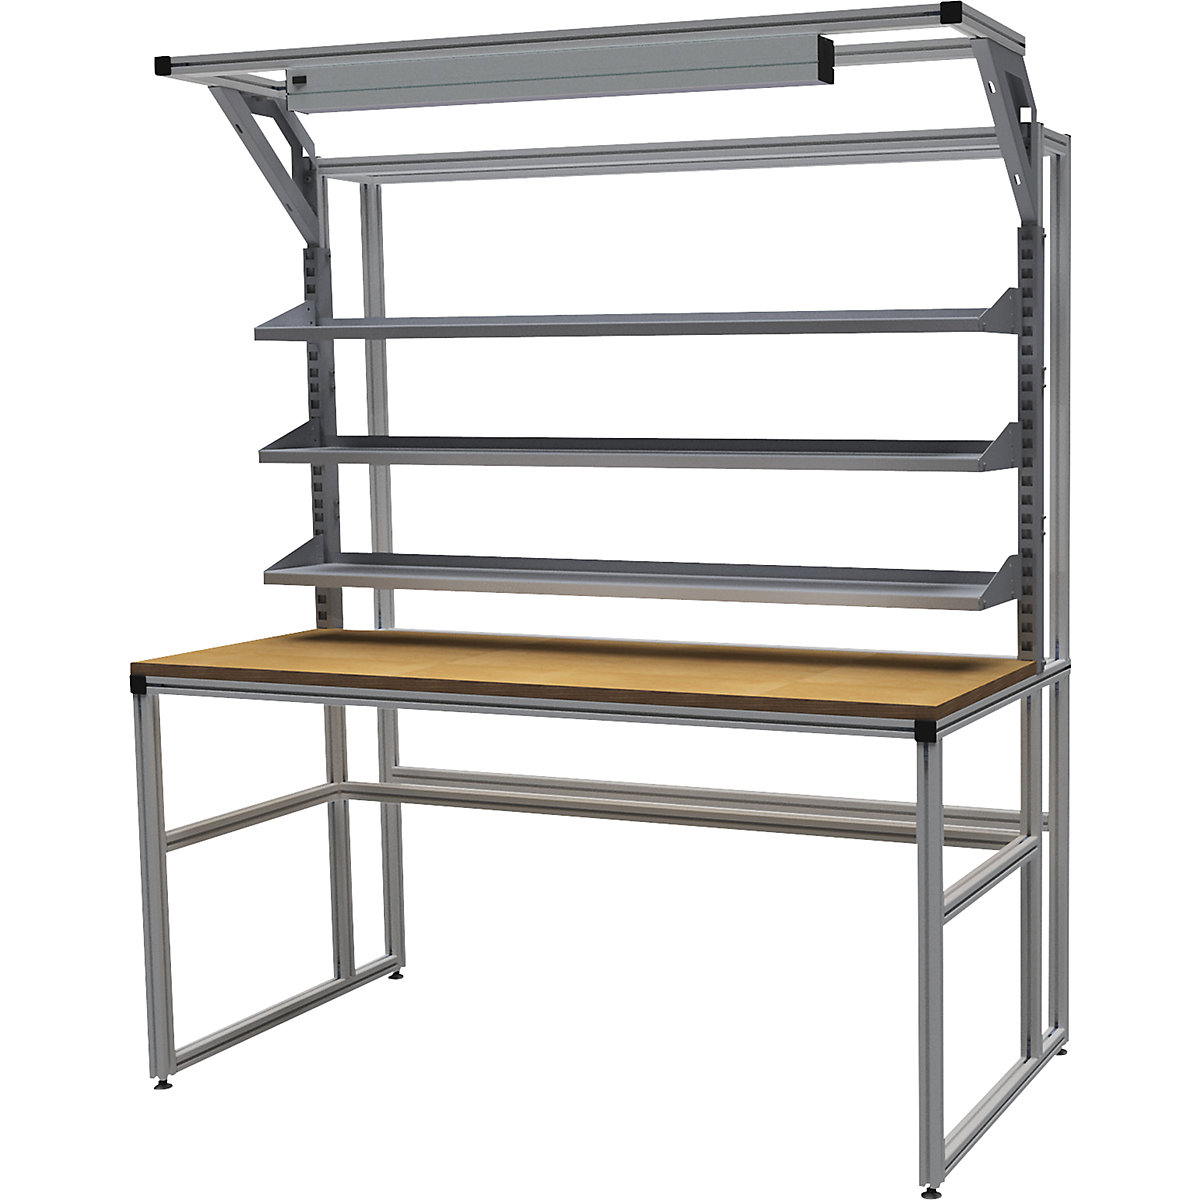 workalu® aluminium workbench with modular system, one sided - bedrunka hirth